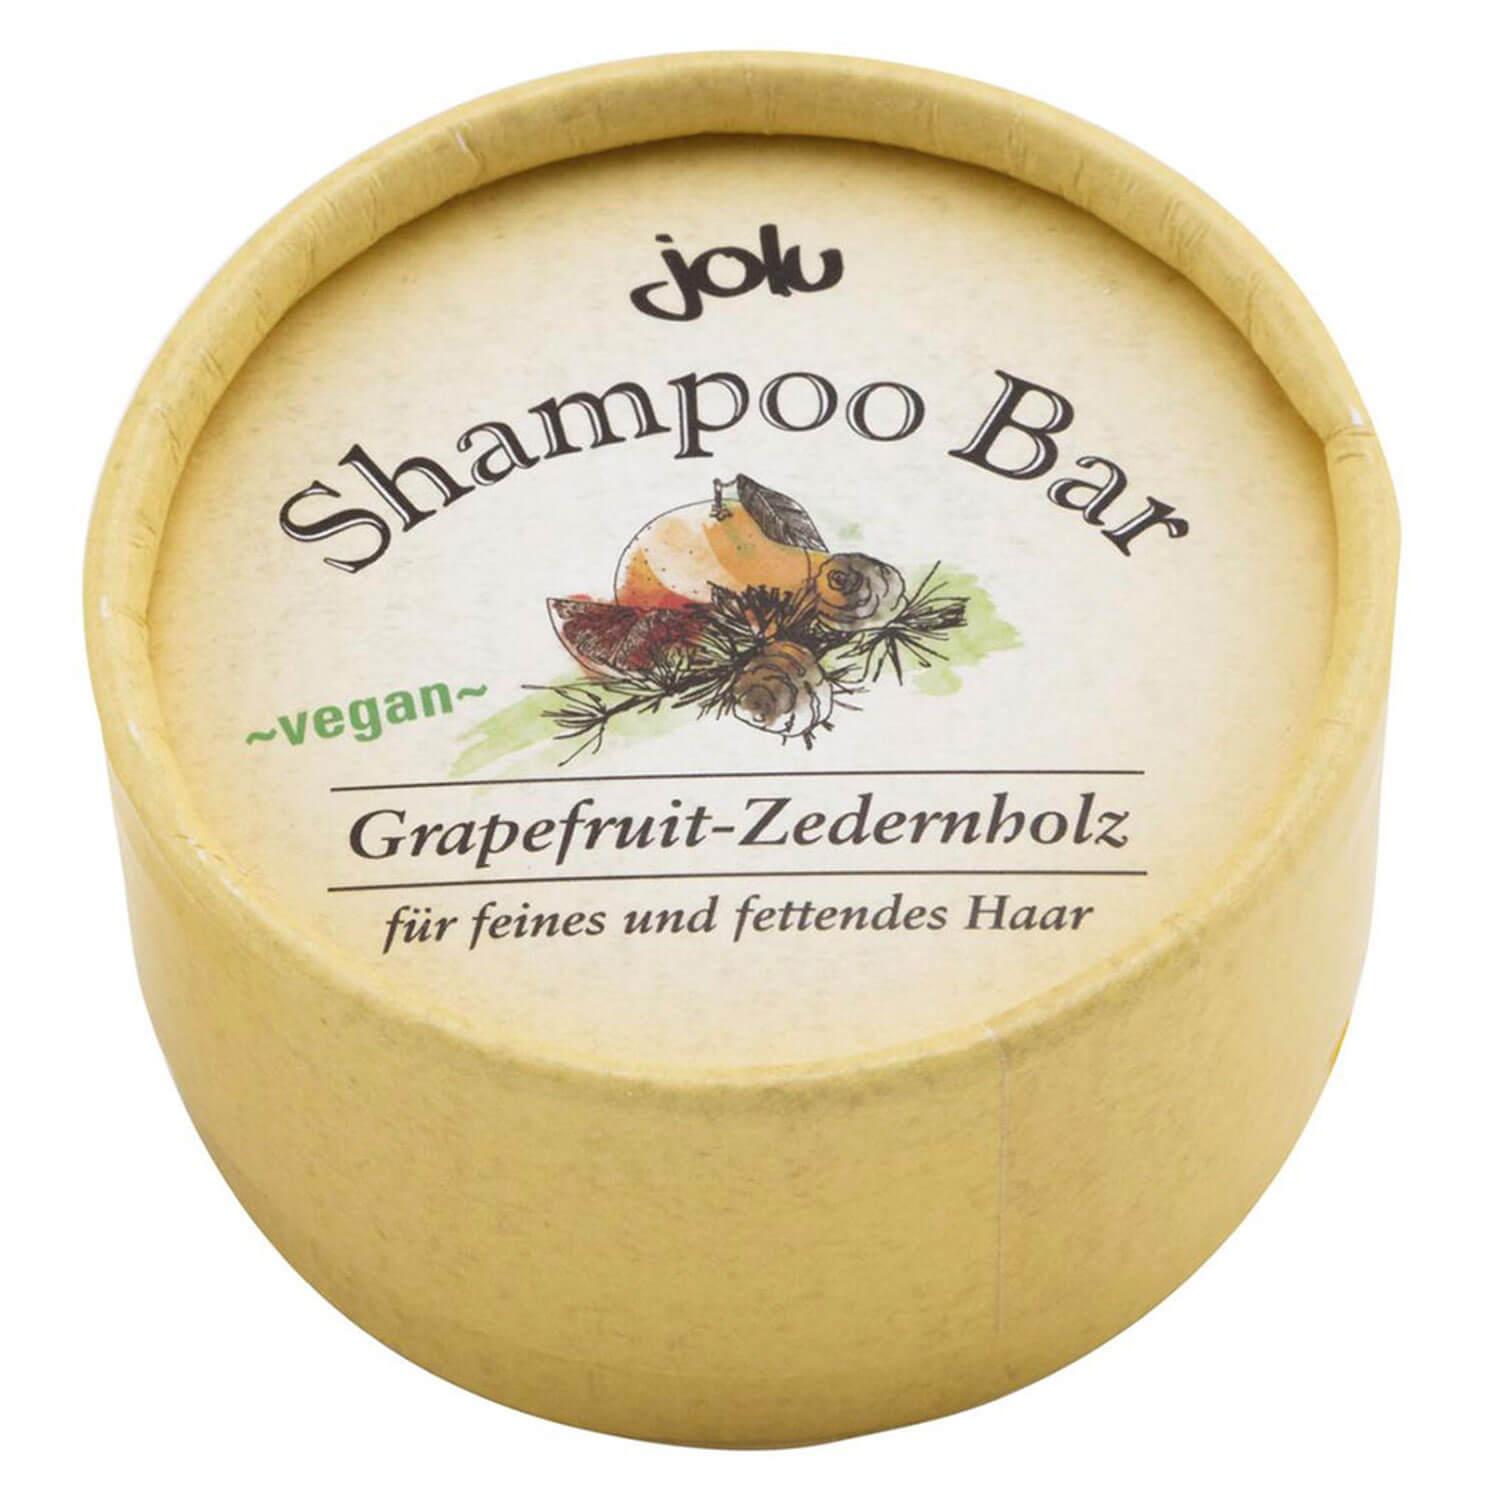 jolu - Shampoo Bar Grapefruit Zedernholz